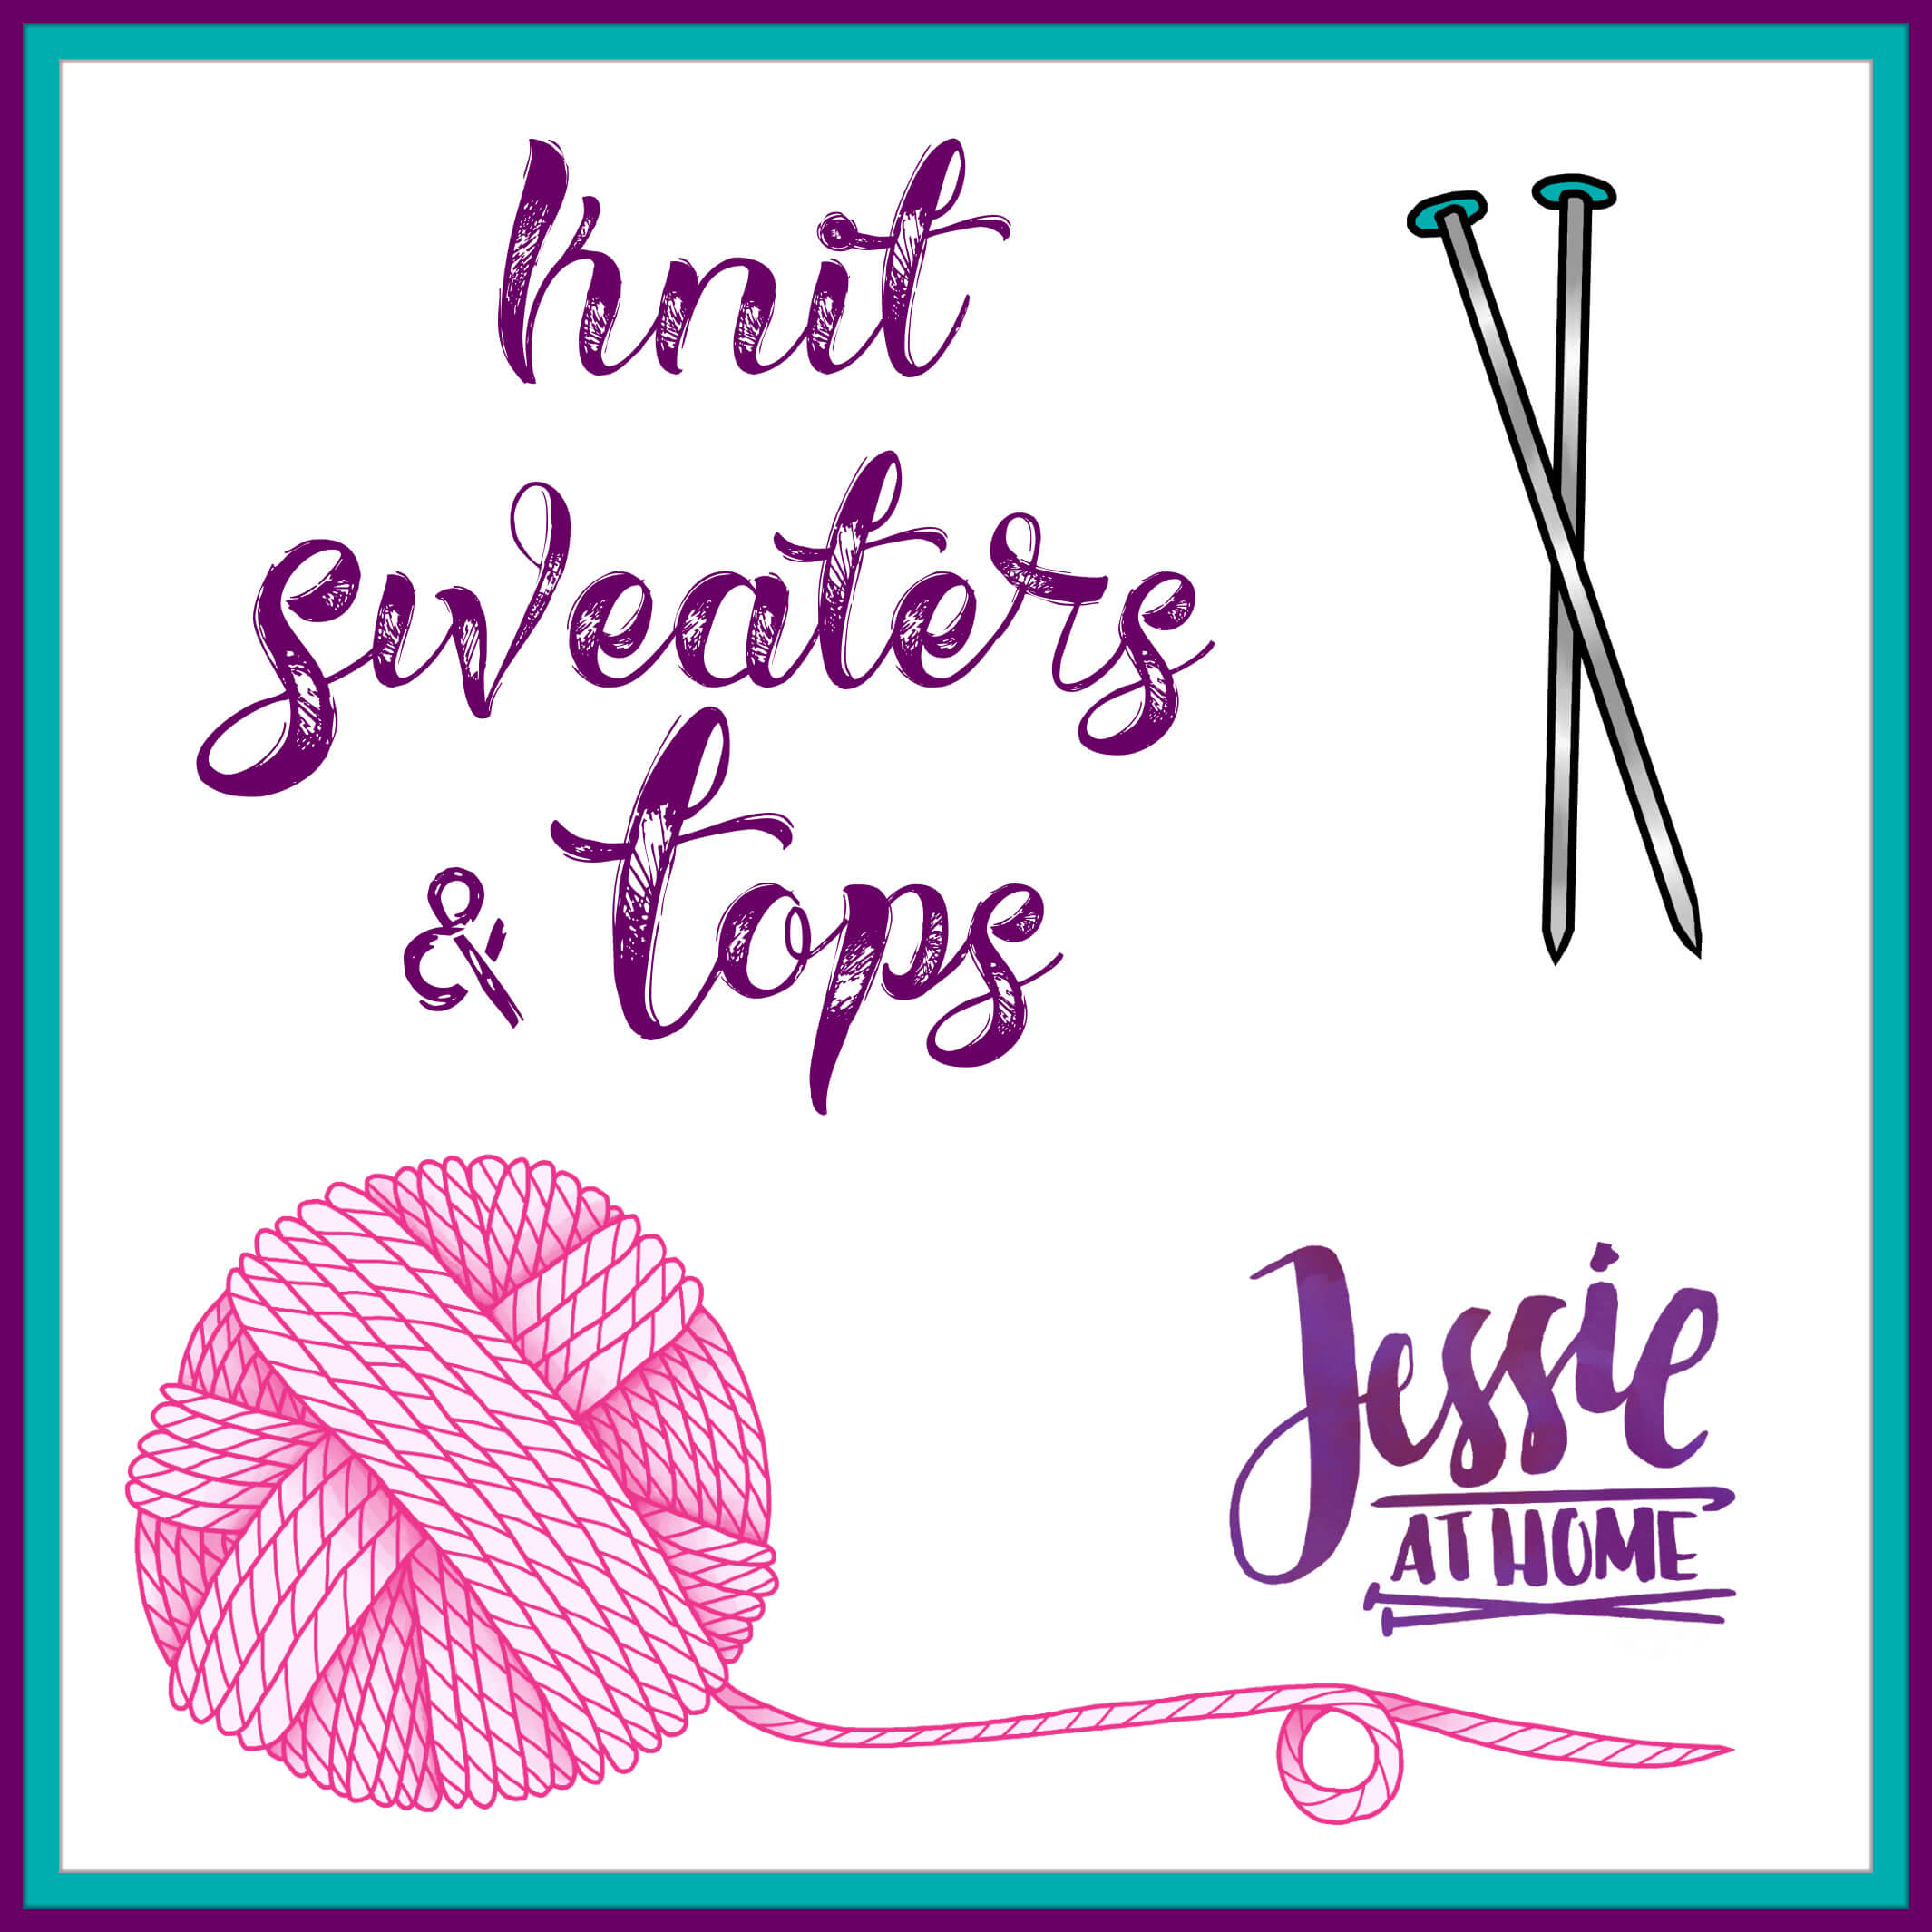 Knit Sweaters & Tops Pattern Menu on Jessie At Home